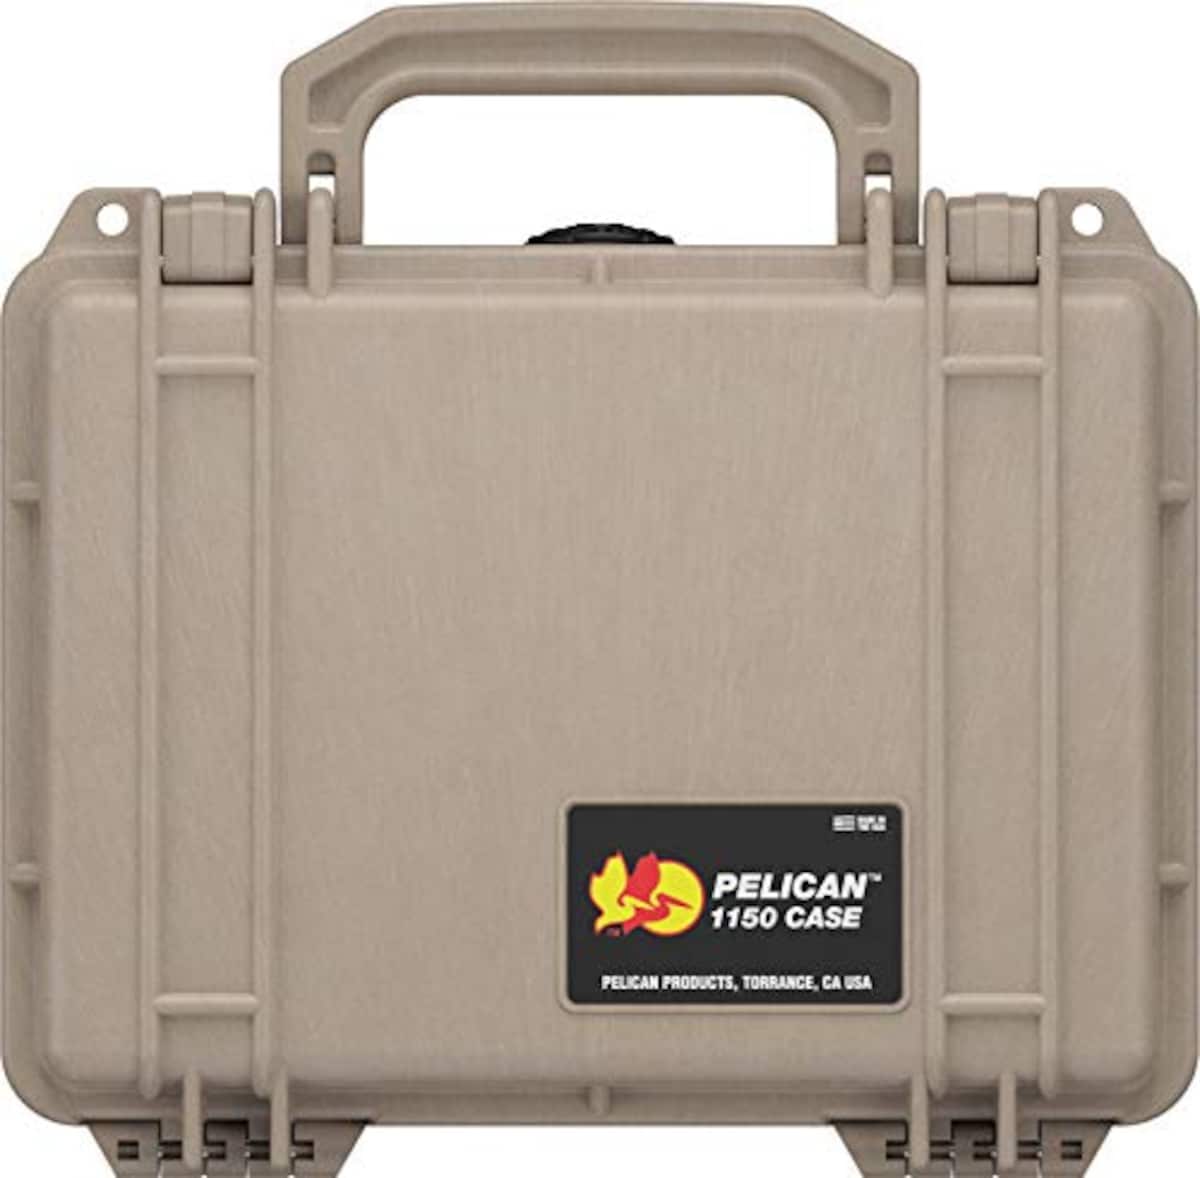  PELICAN(ペリカン) 小型防水ハードケース 1150HK デザートタン 1150HKDT 2.8L画像5 